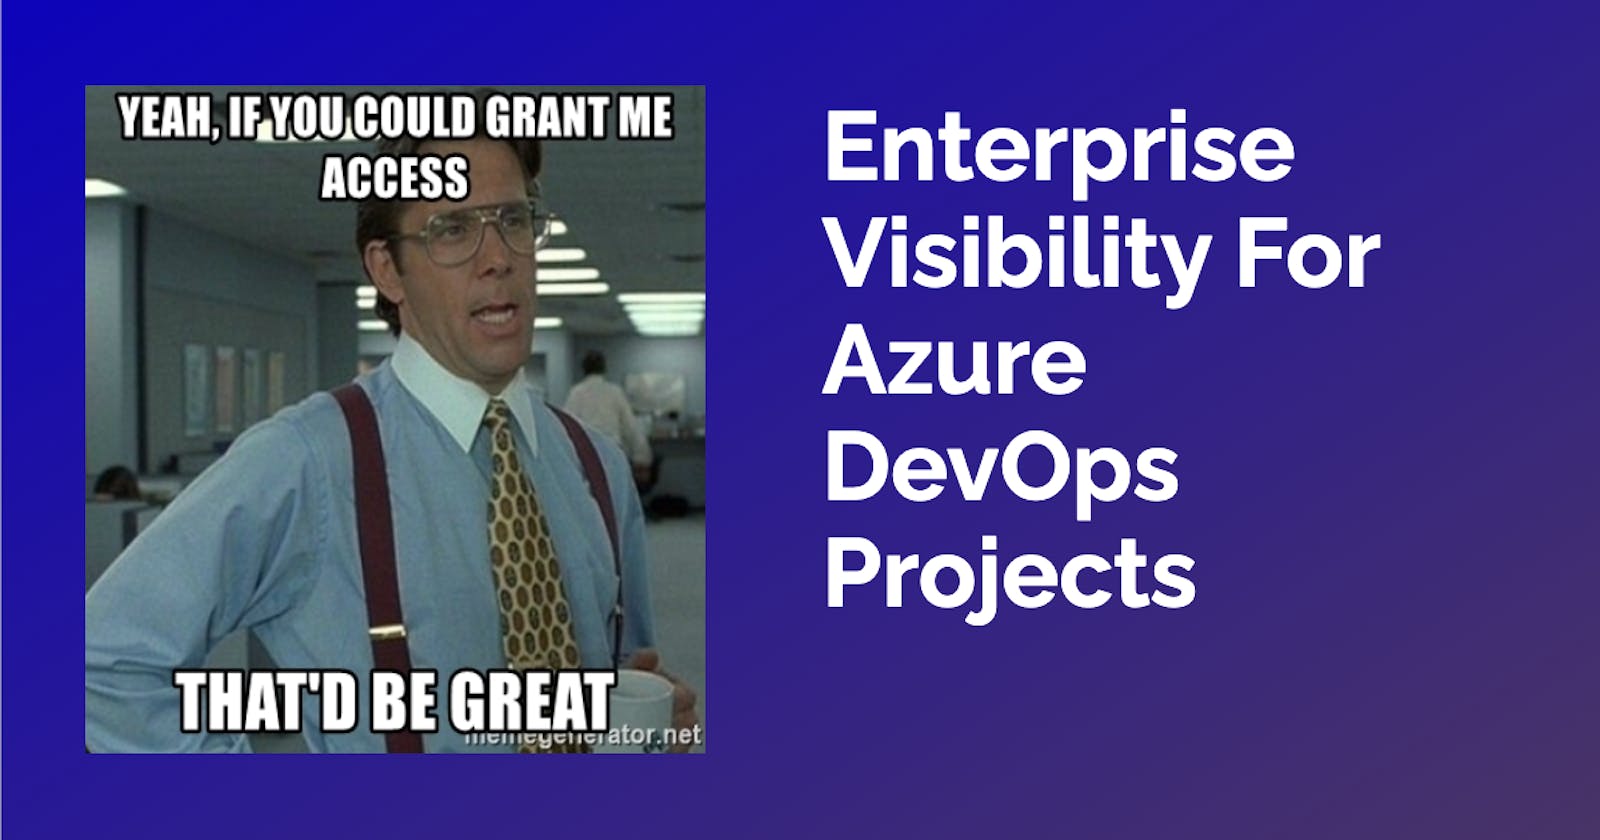 Enterprise Visibility For Azure DevOps Projects